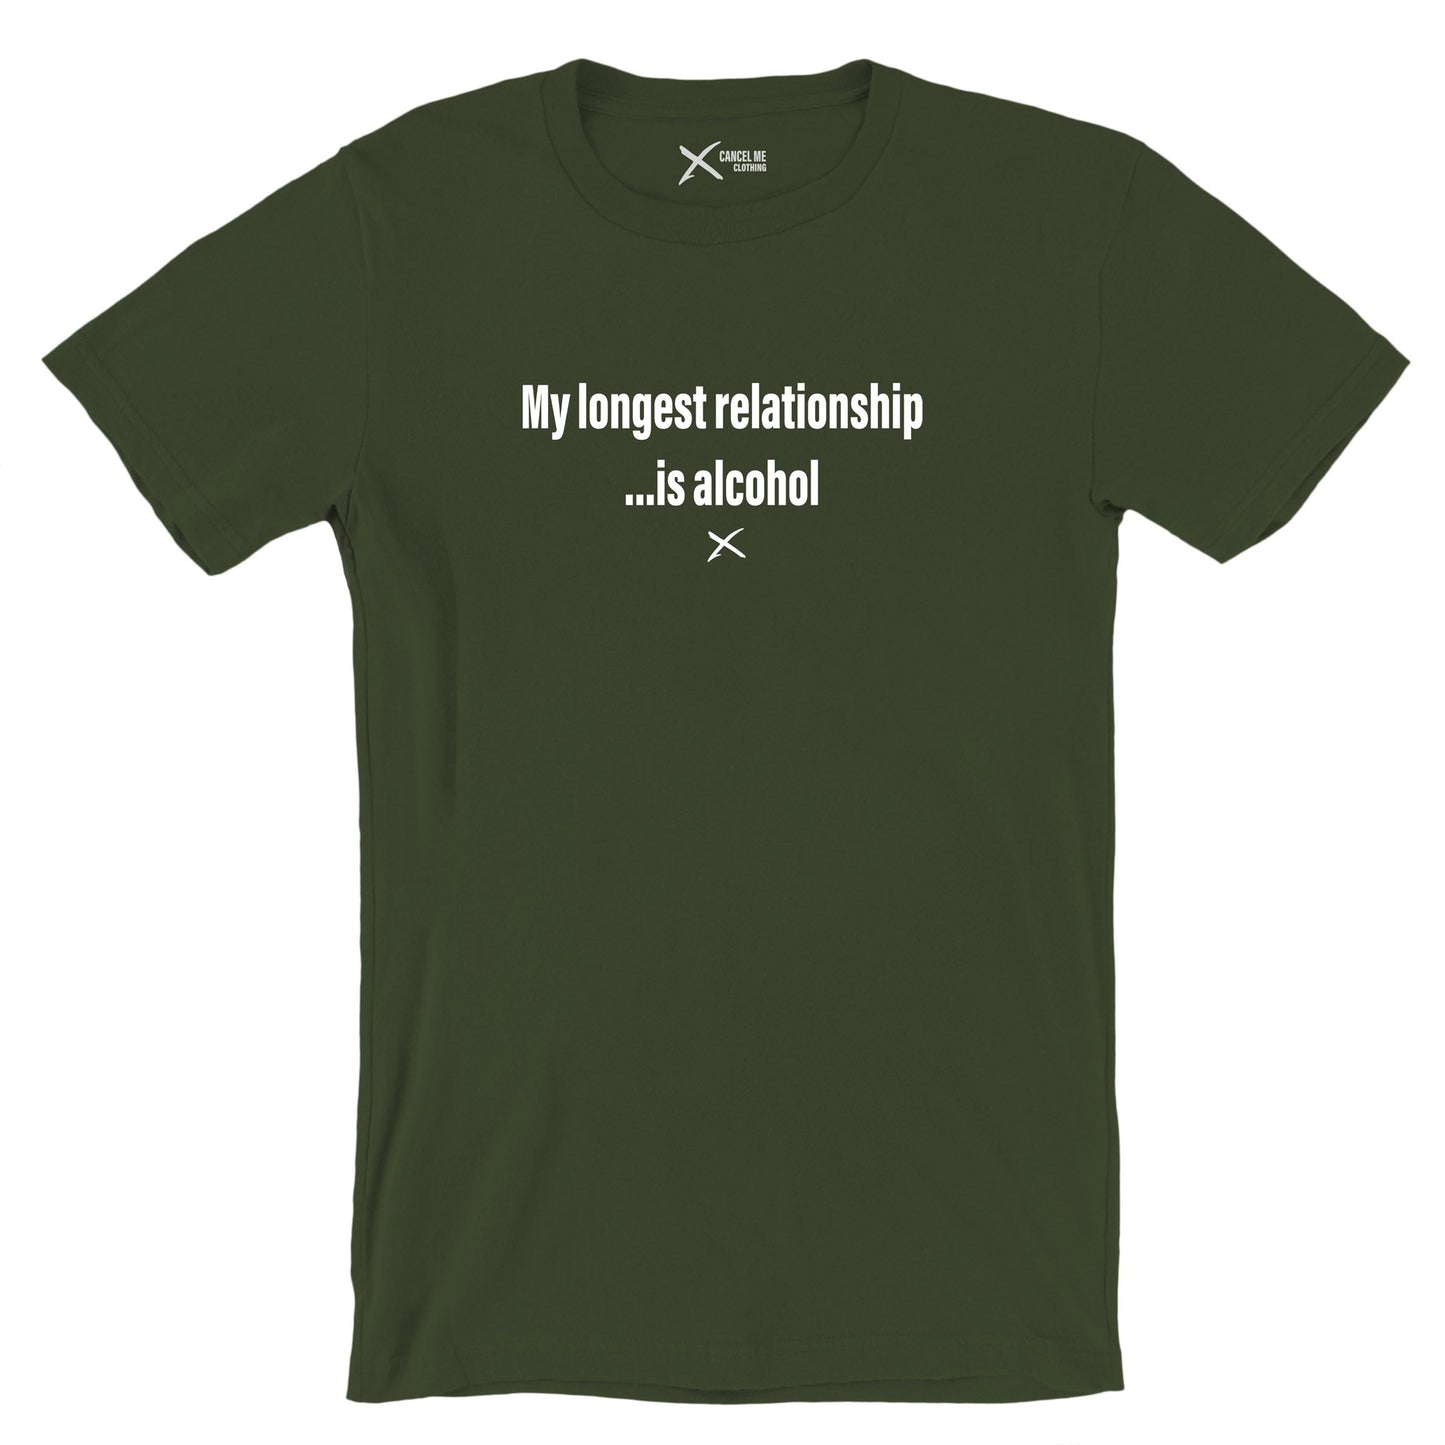 My longest relationship ...is alcohol - Shirt